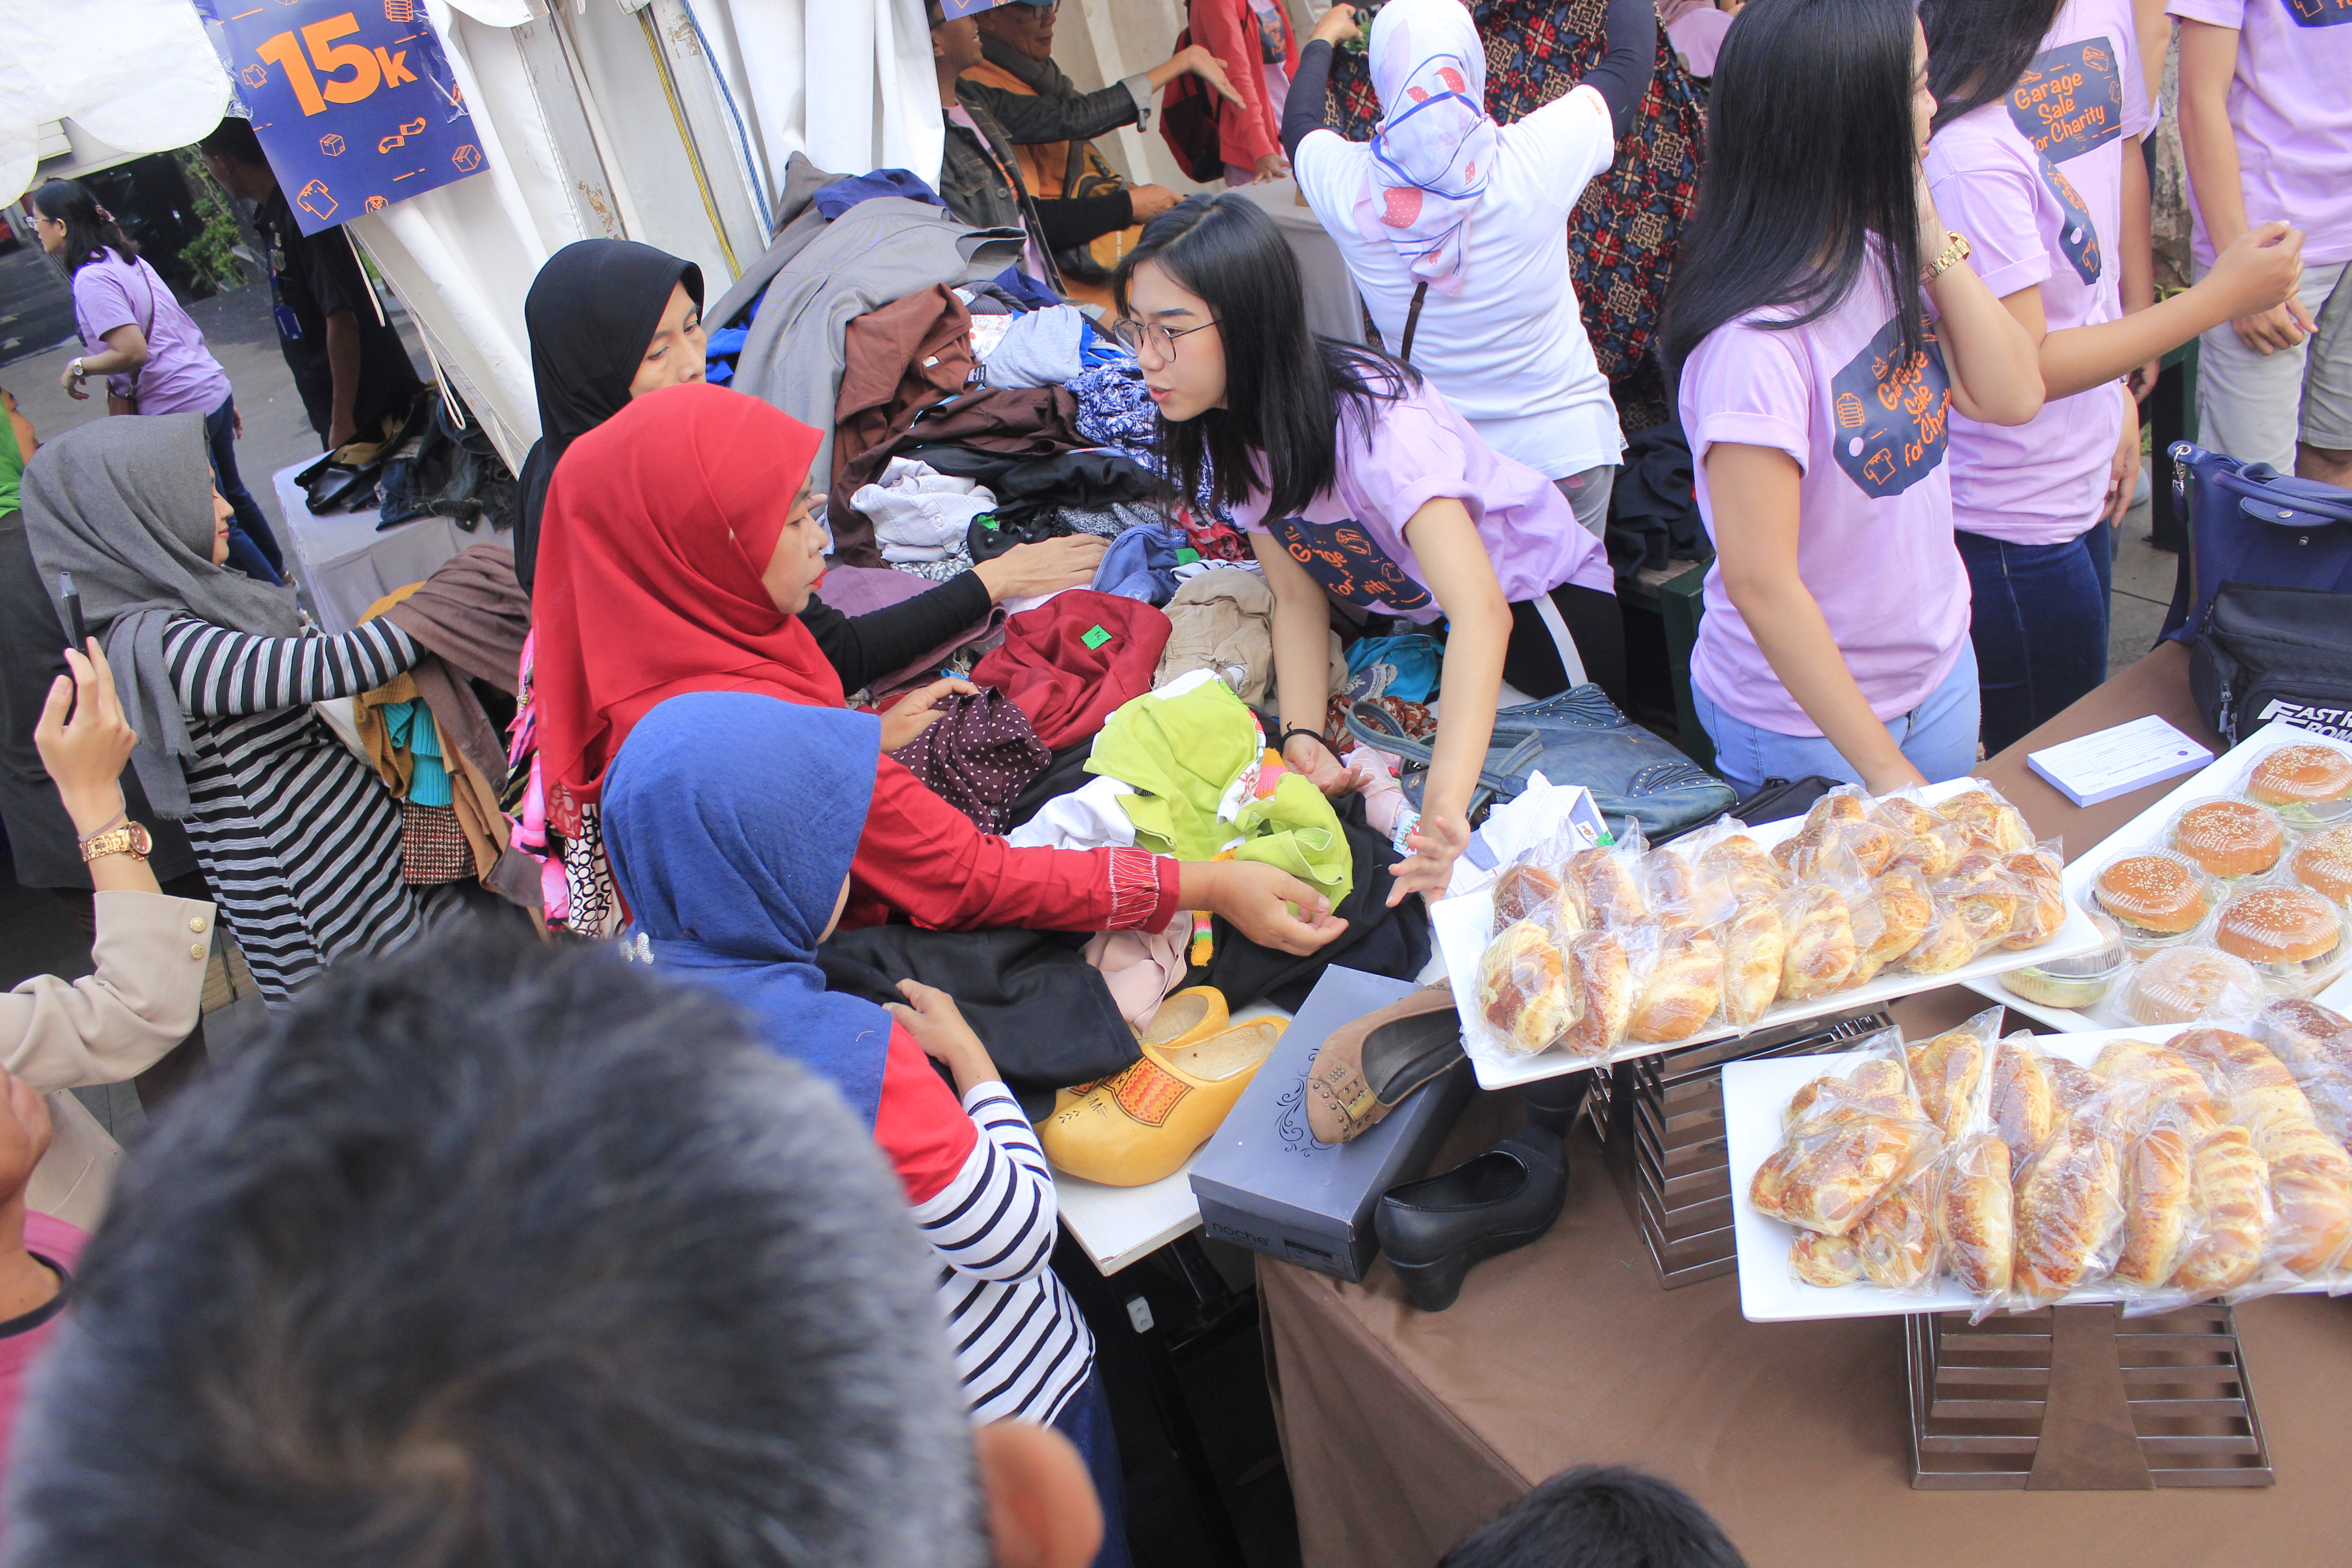 AccorHotels Bandung Peringati Hari Wanita Sedunia Dengan “Garage Sale For Charity”